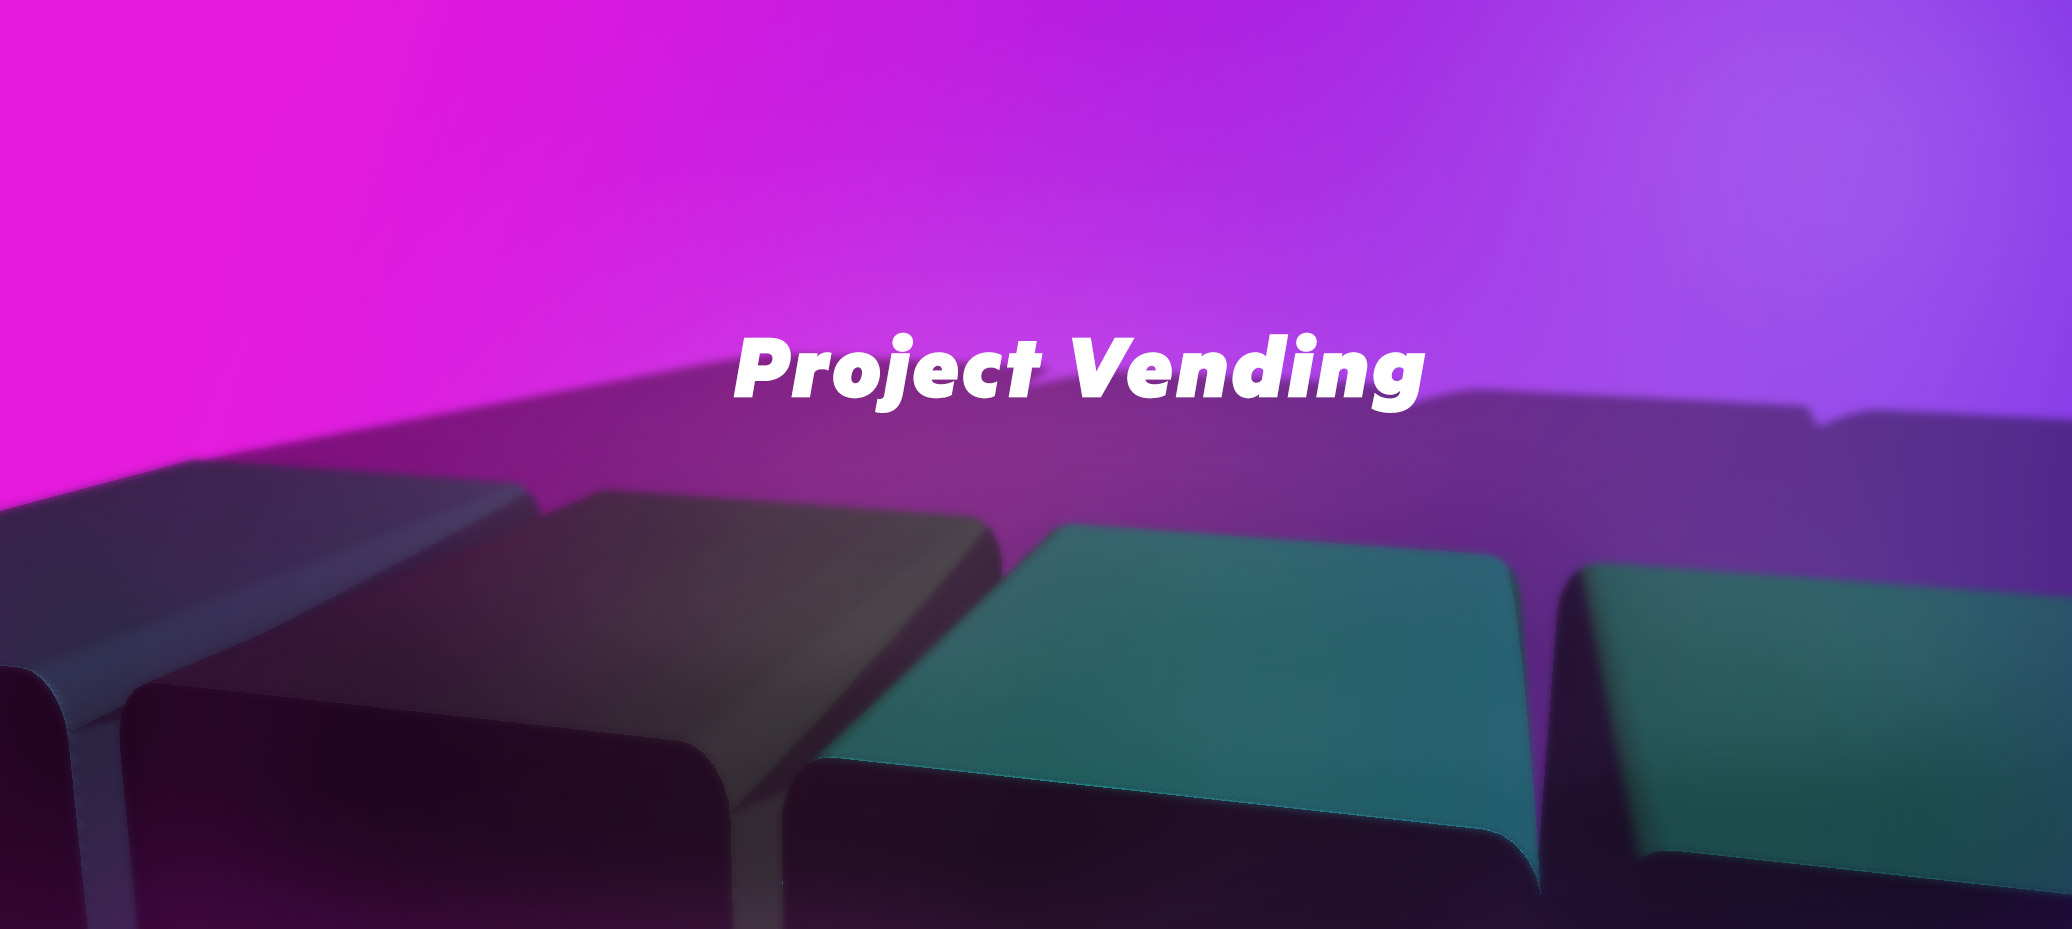 Project Vending Prototype